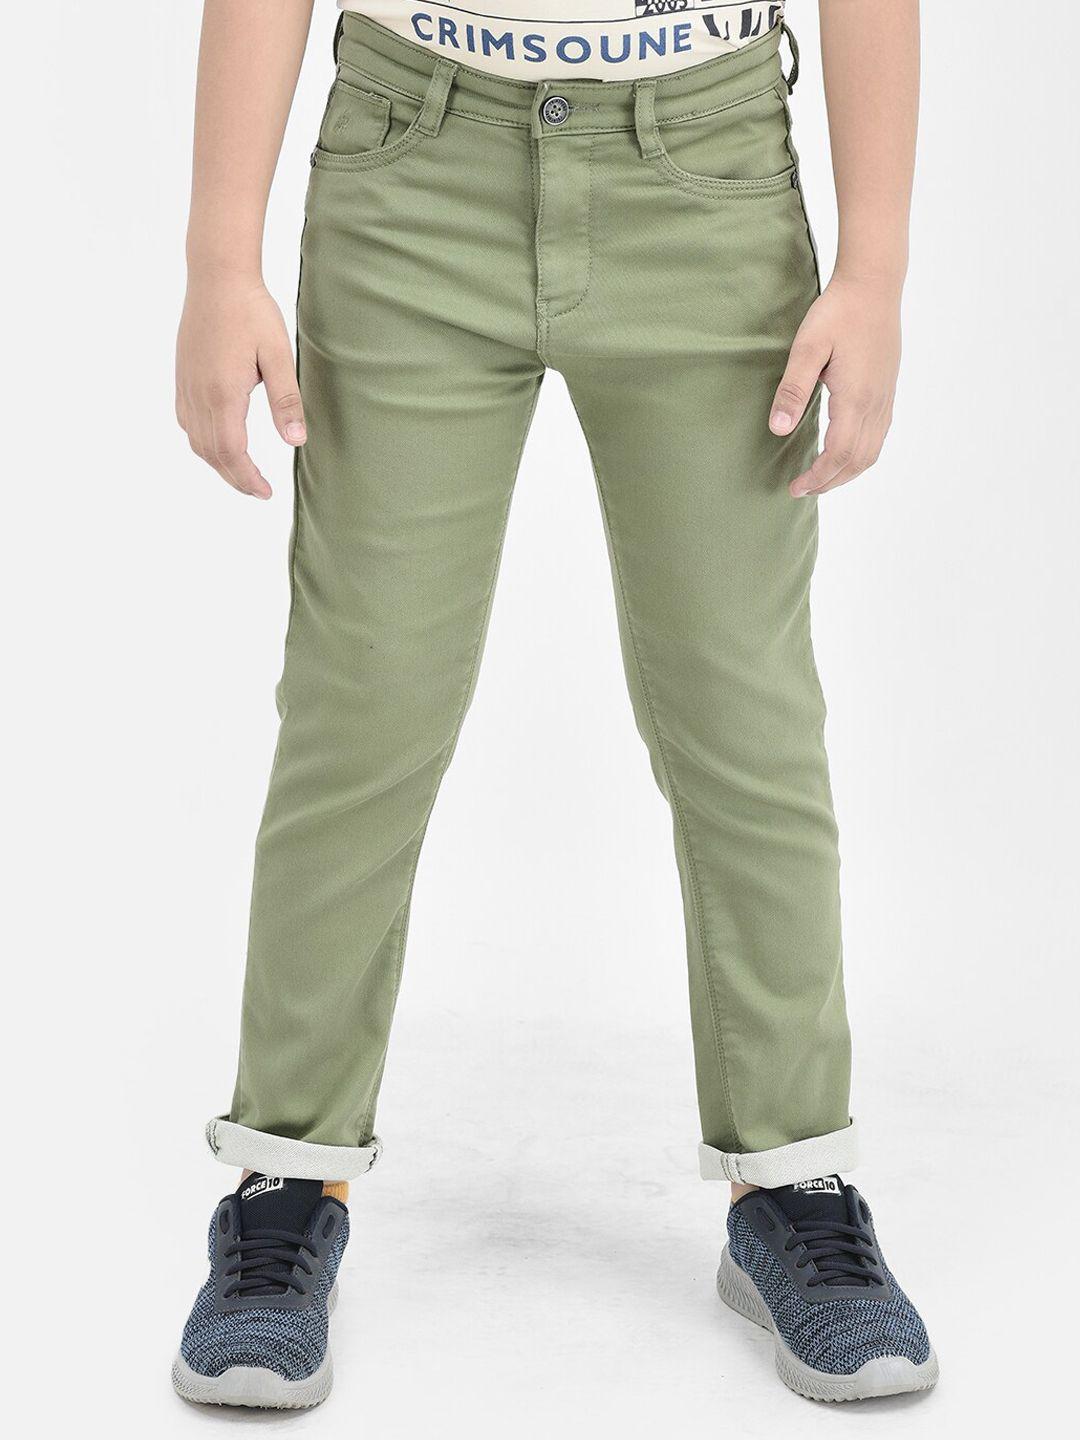 crimsoune-club-boys-olive-green-slim-fit-trousers